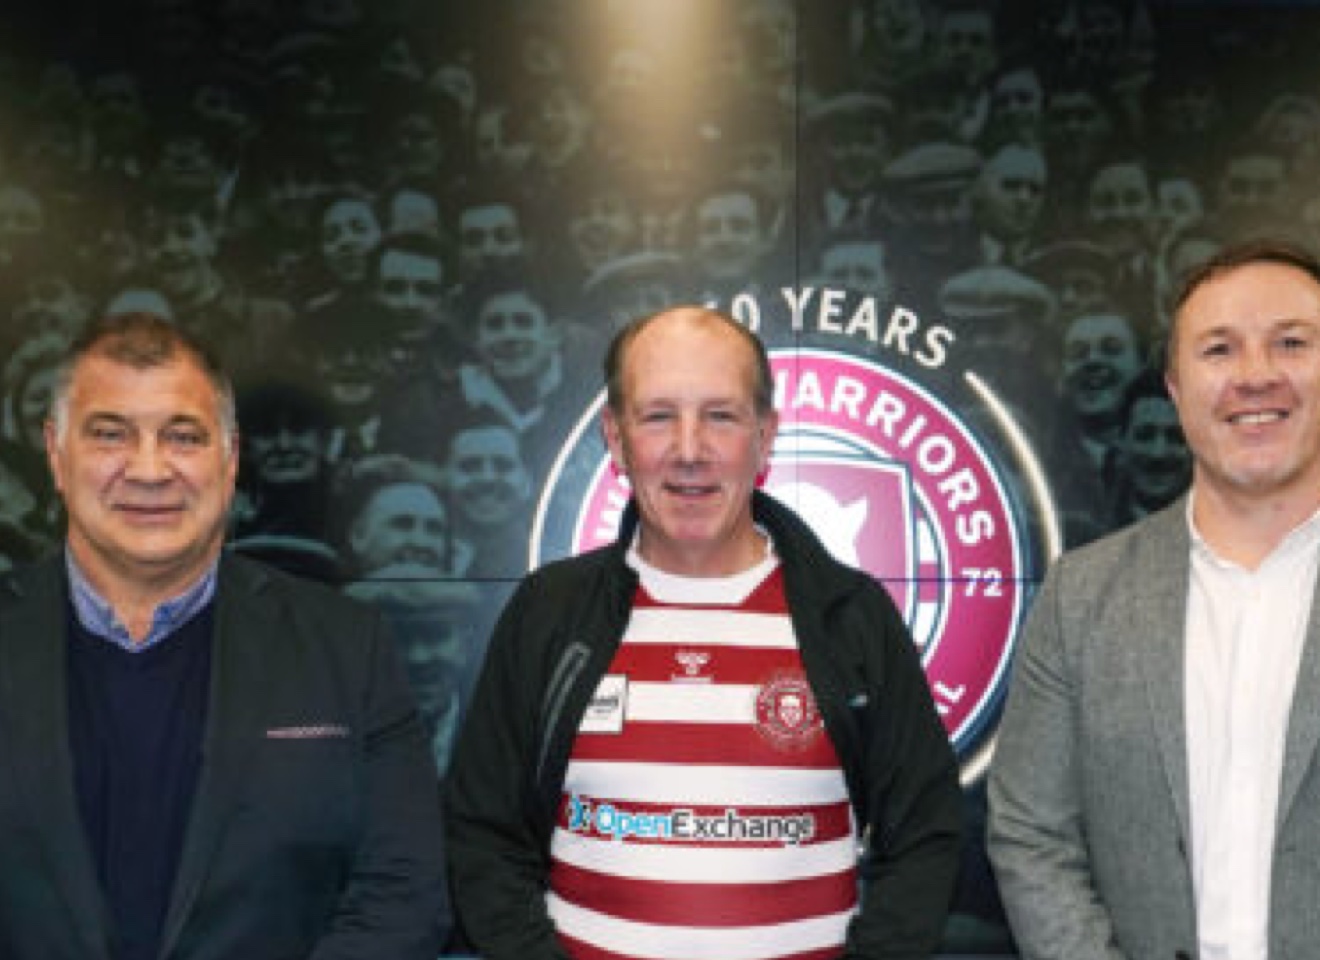 OpenExchange Strikes Sponsorship Deal with Wigan Warriors Rugby Club